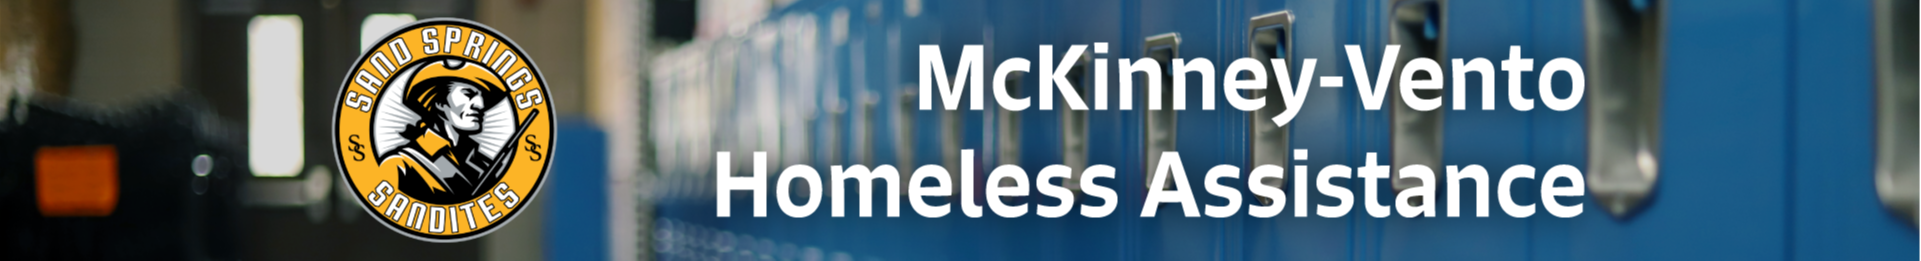 McKinney-Vento Homeless Assistance